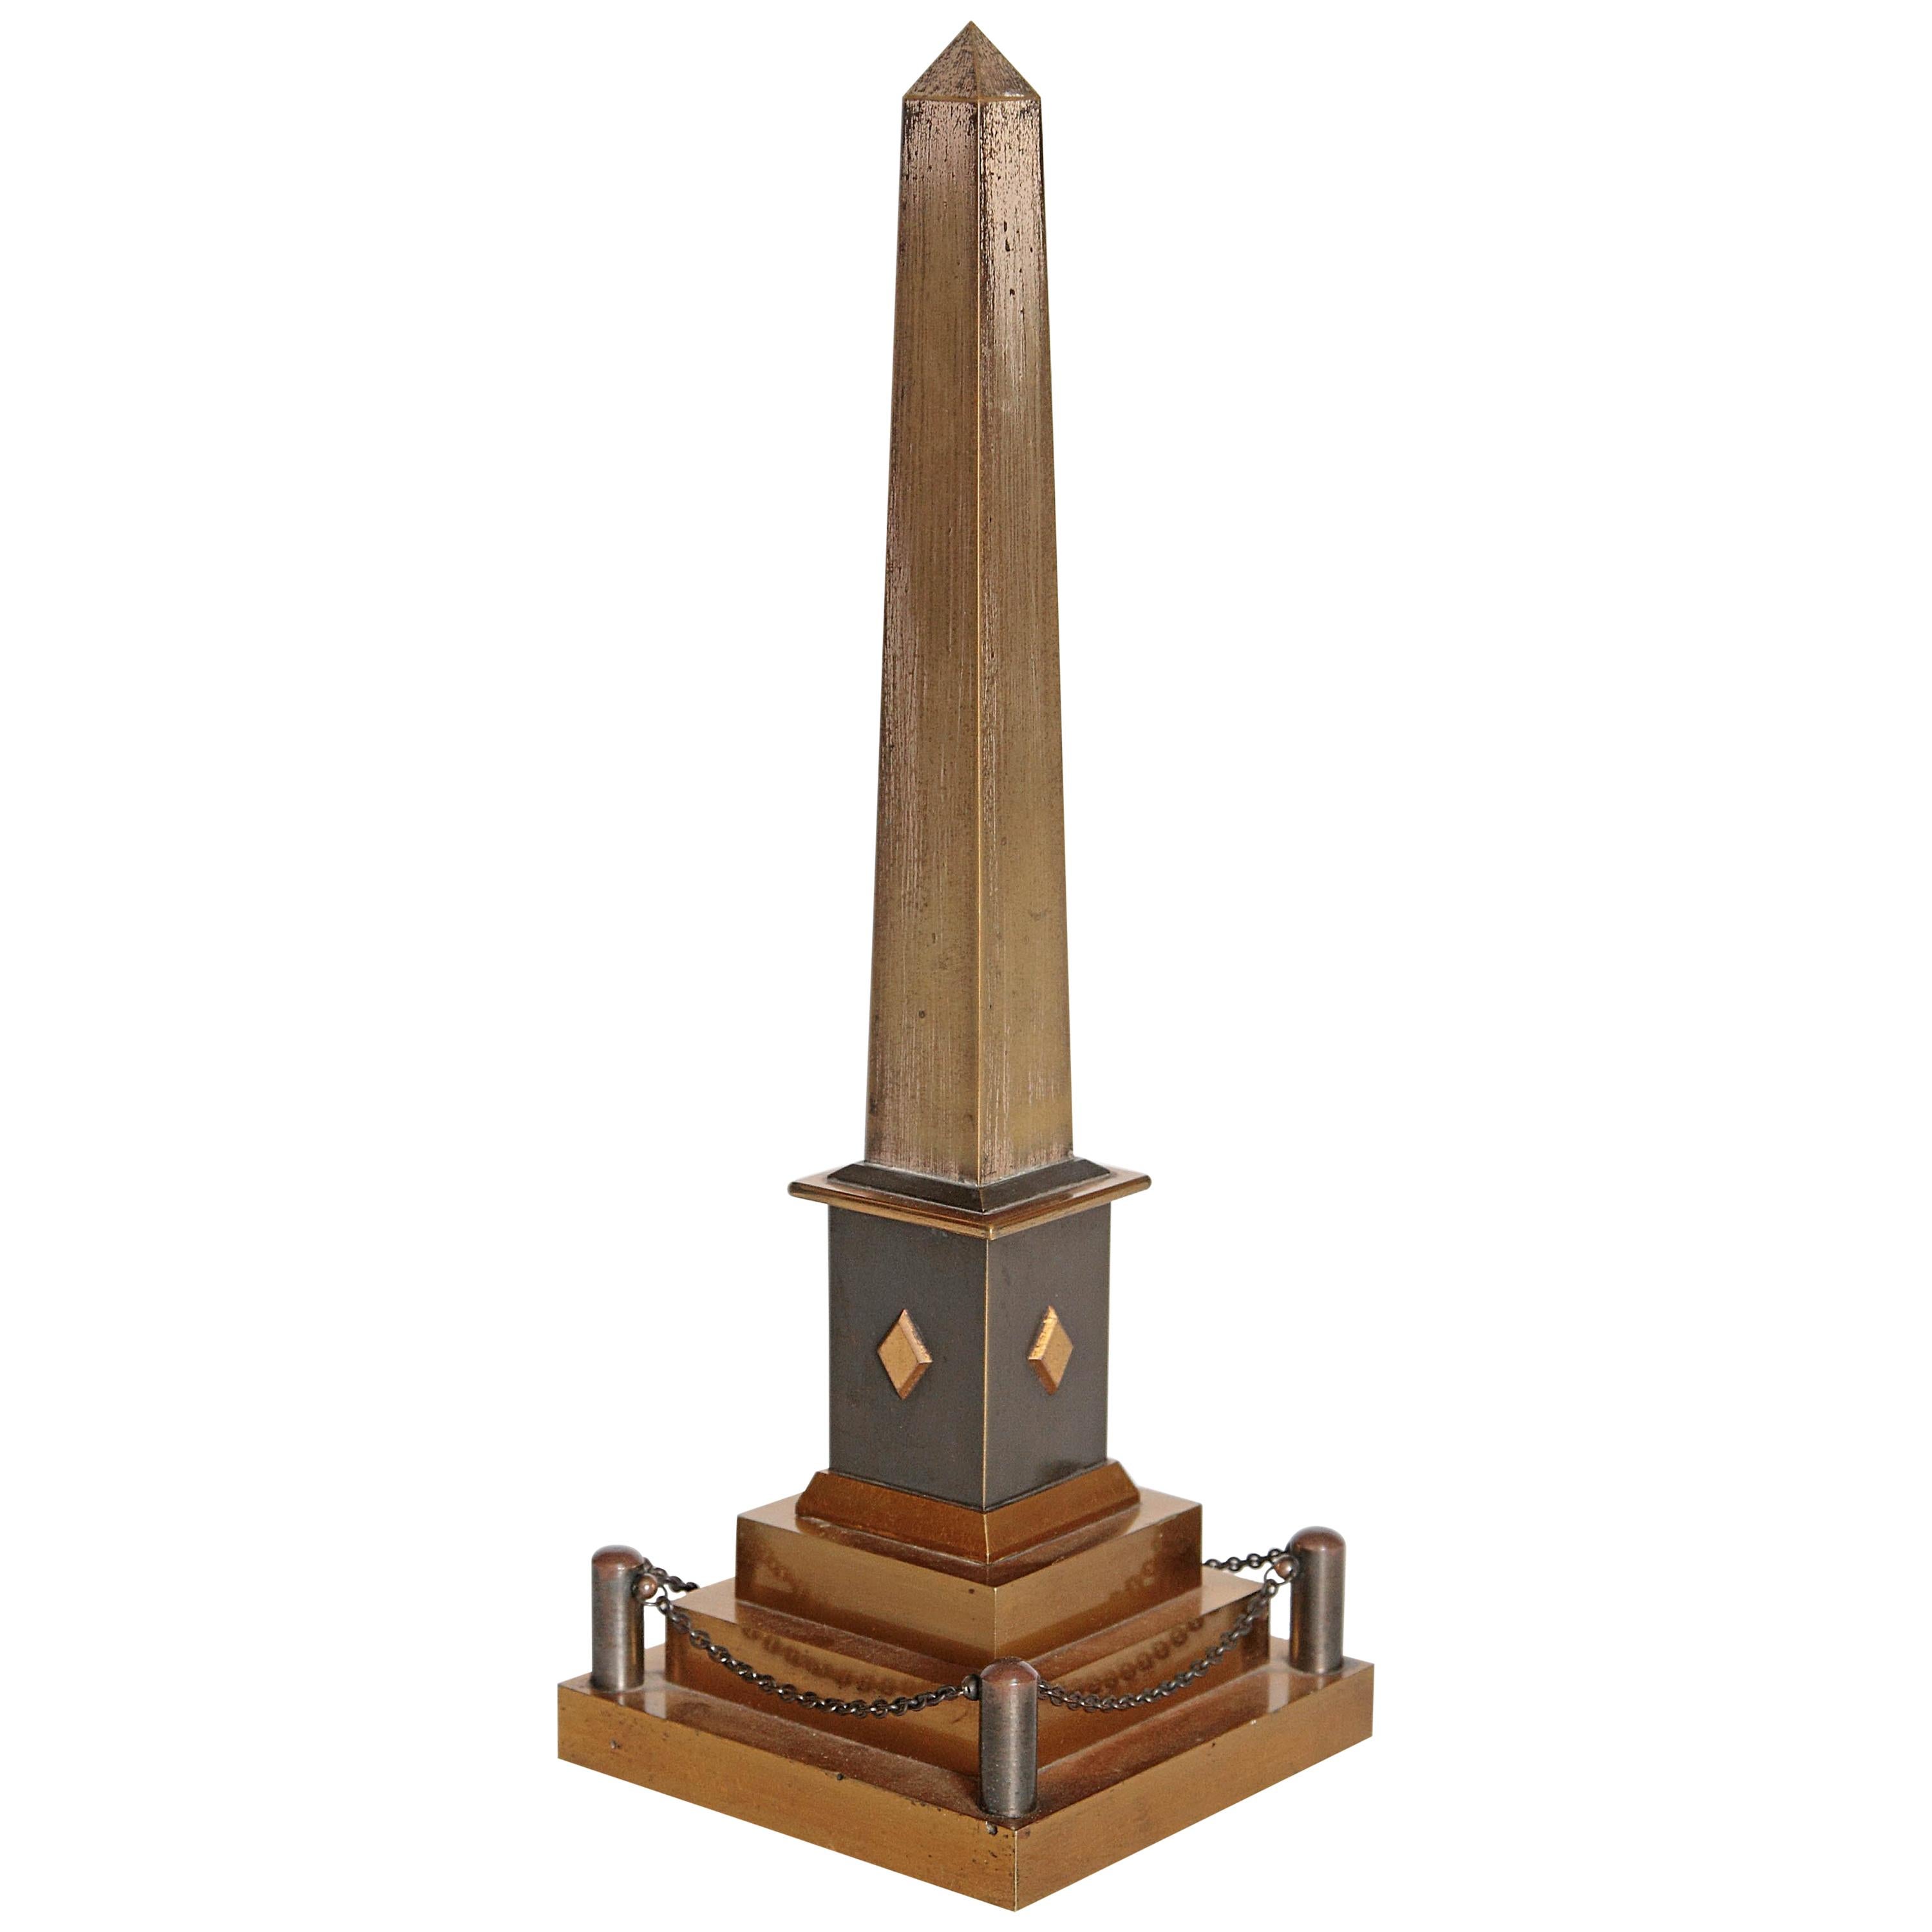 Kontinentales Grand Tour-Obelisk-thermometer aus dem frühen 19. Jahrhundert